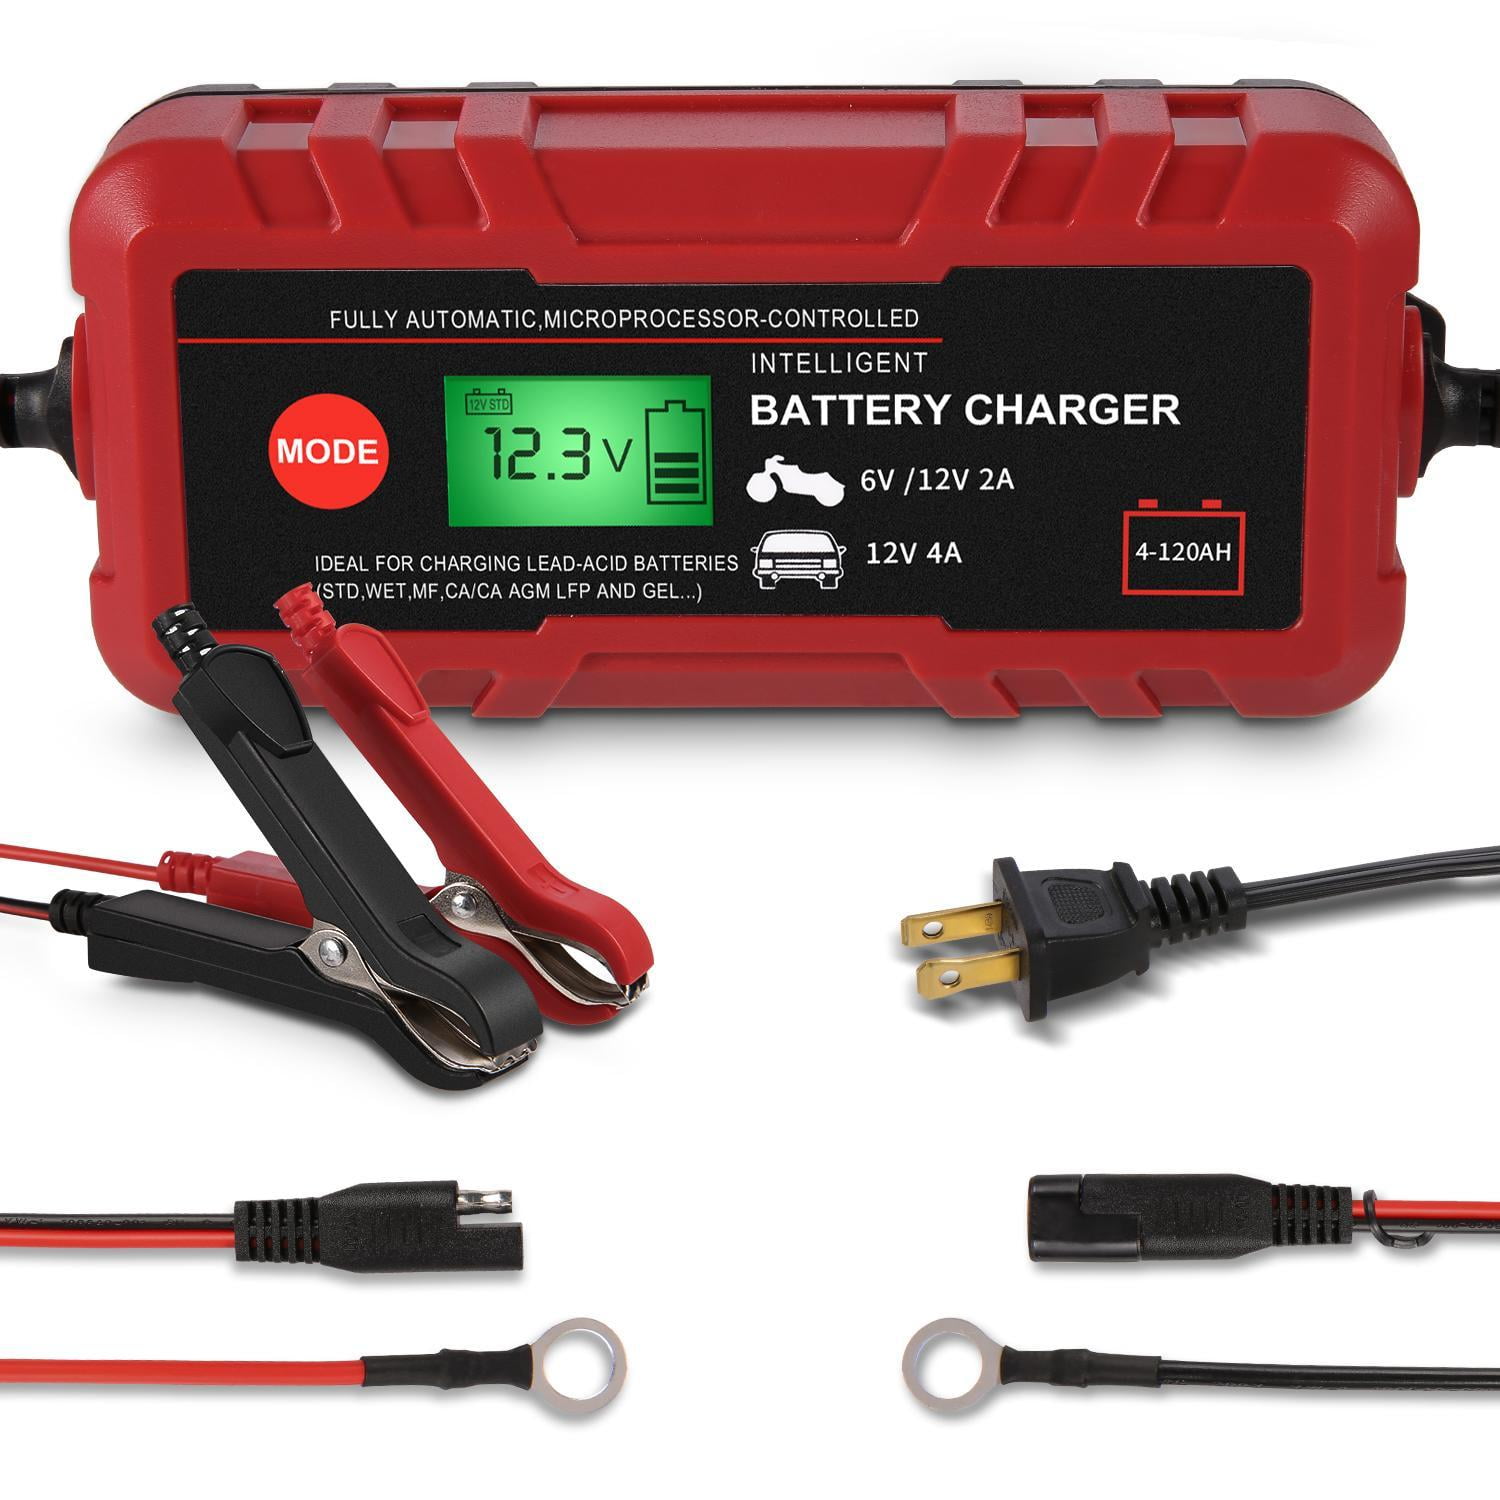 Intelligent battery. Autobike Battery Charger артикул. Intelligent Battery Charger. Full Automatic Intelligent Battery Charger. 12v Battery.